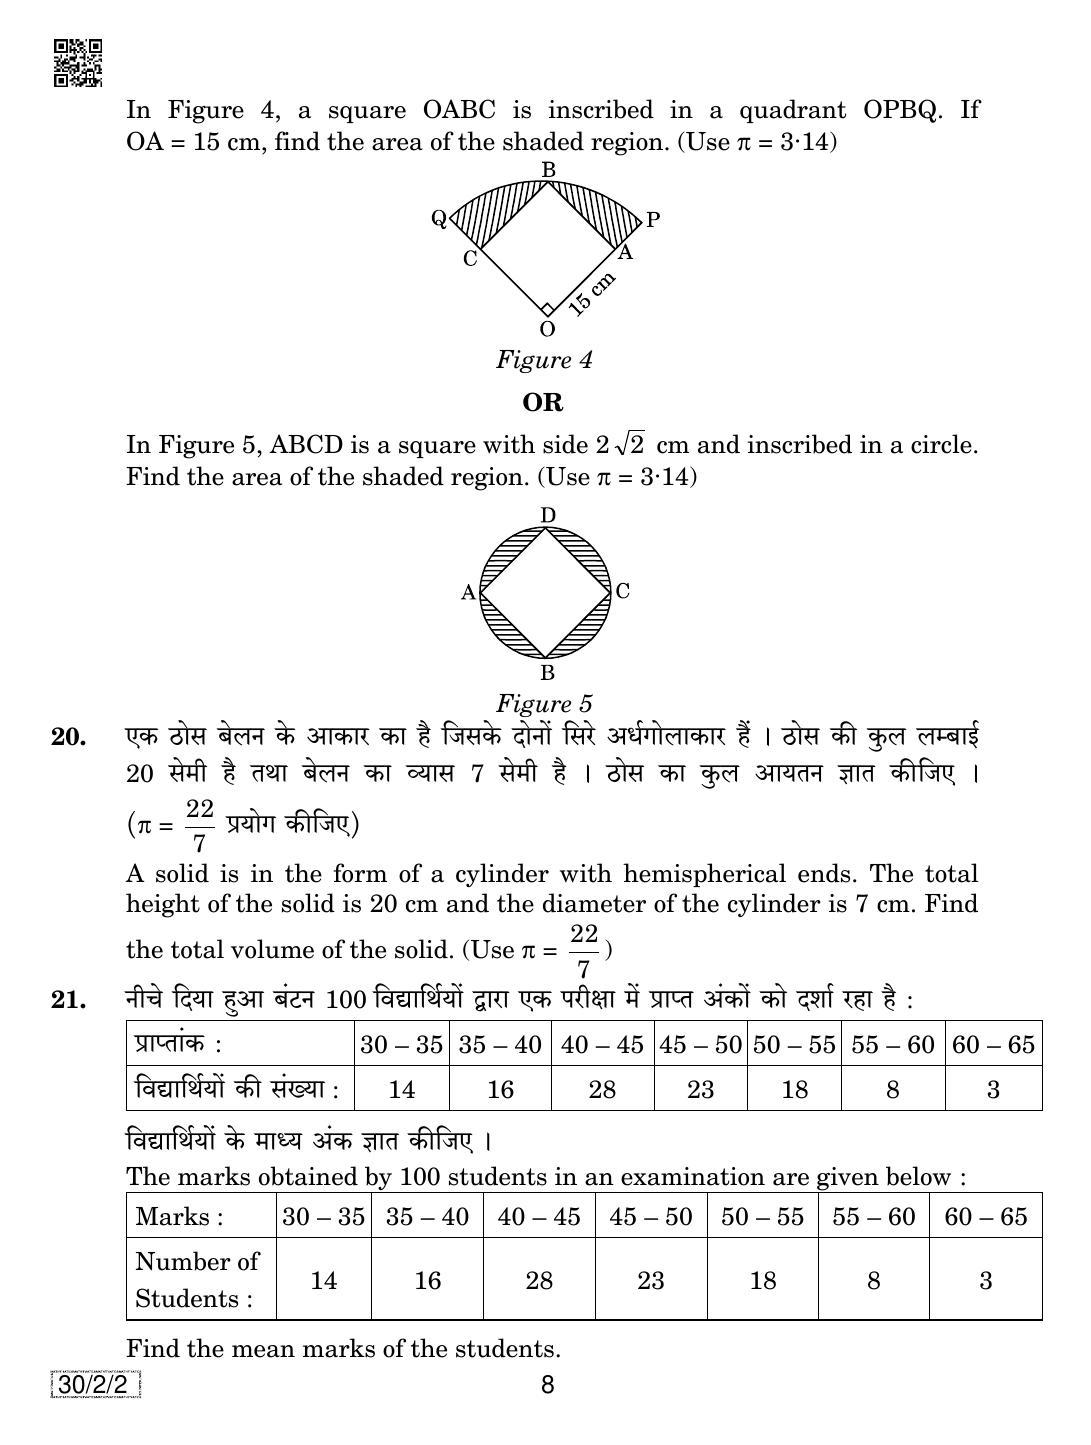 CBSE Class 10 Maths (30/2/2 - SET 2) 2019 Question Paper - Page 8